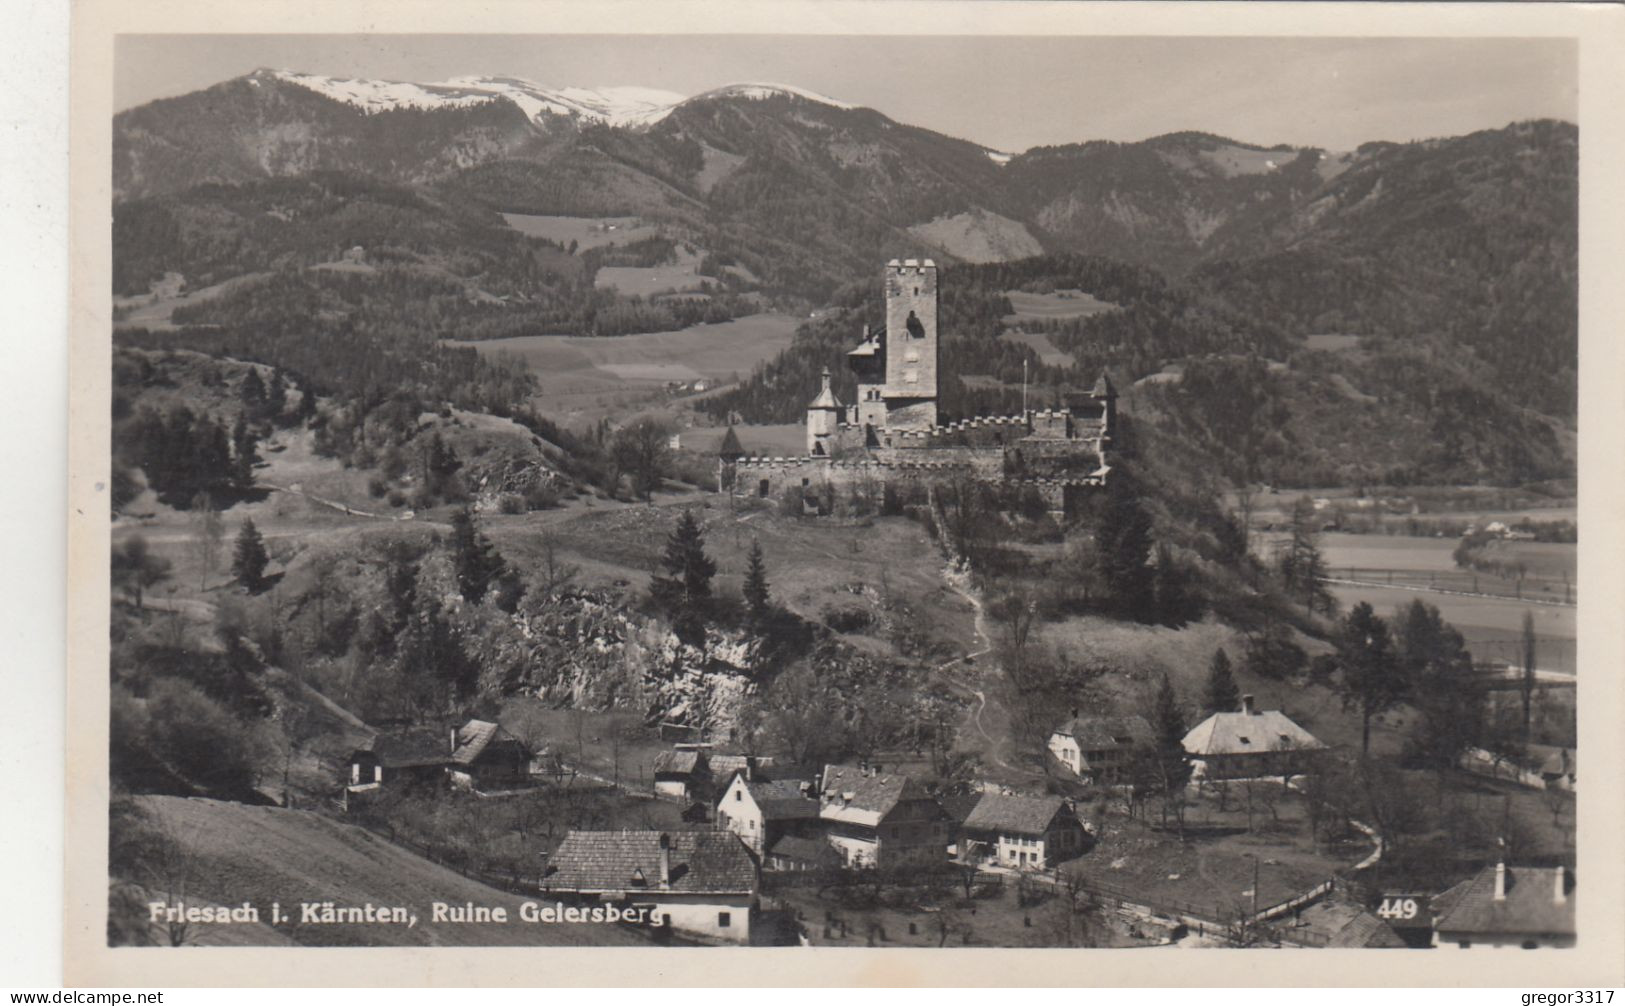 E3239) FRIESACH In Kärnten - Ruine GEIERSBERG U. Häuser Details Davor - ALT !! 1949 - Friesach